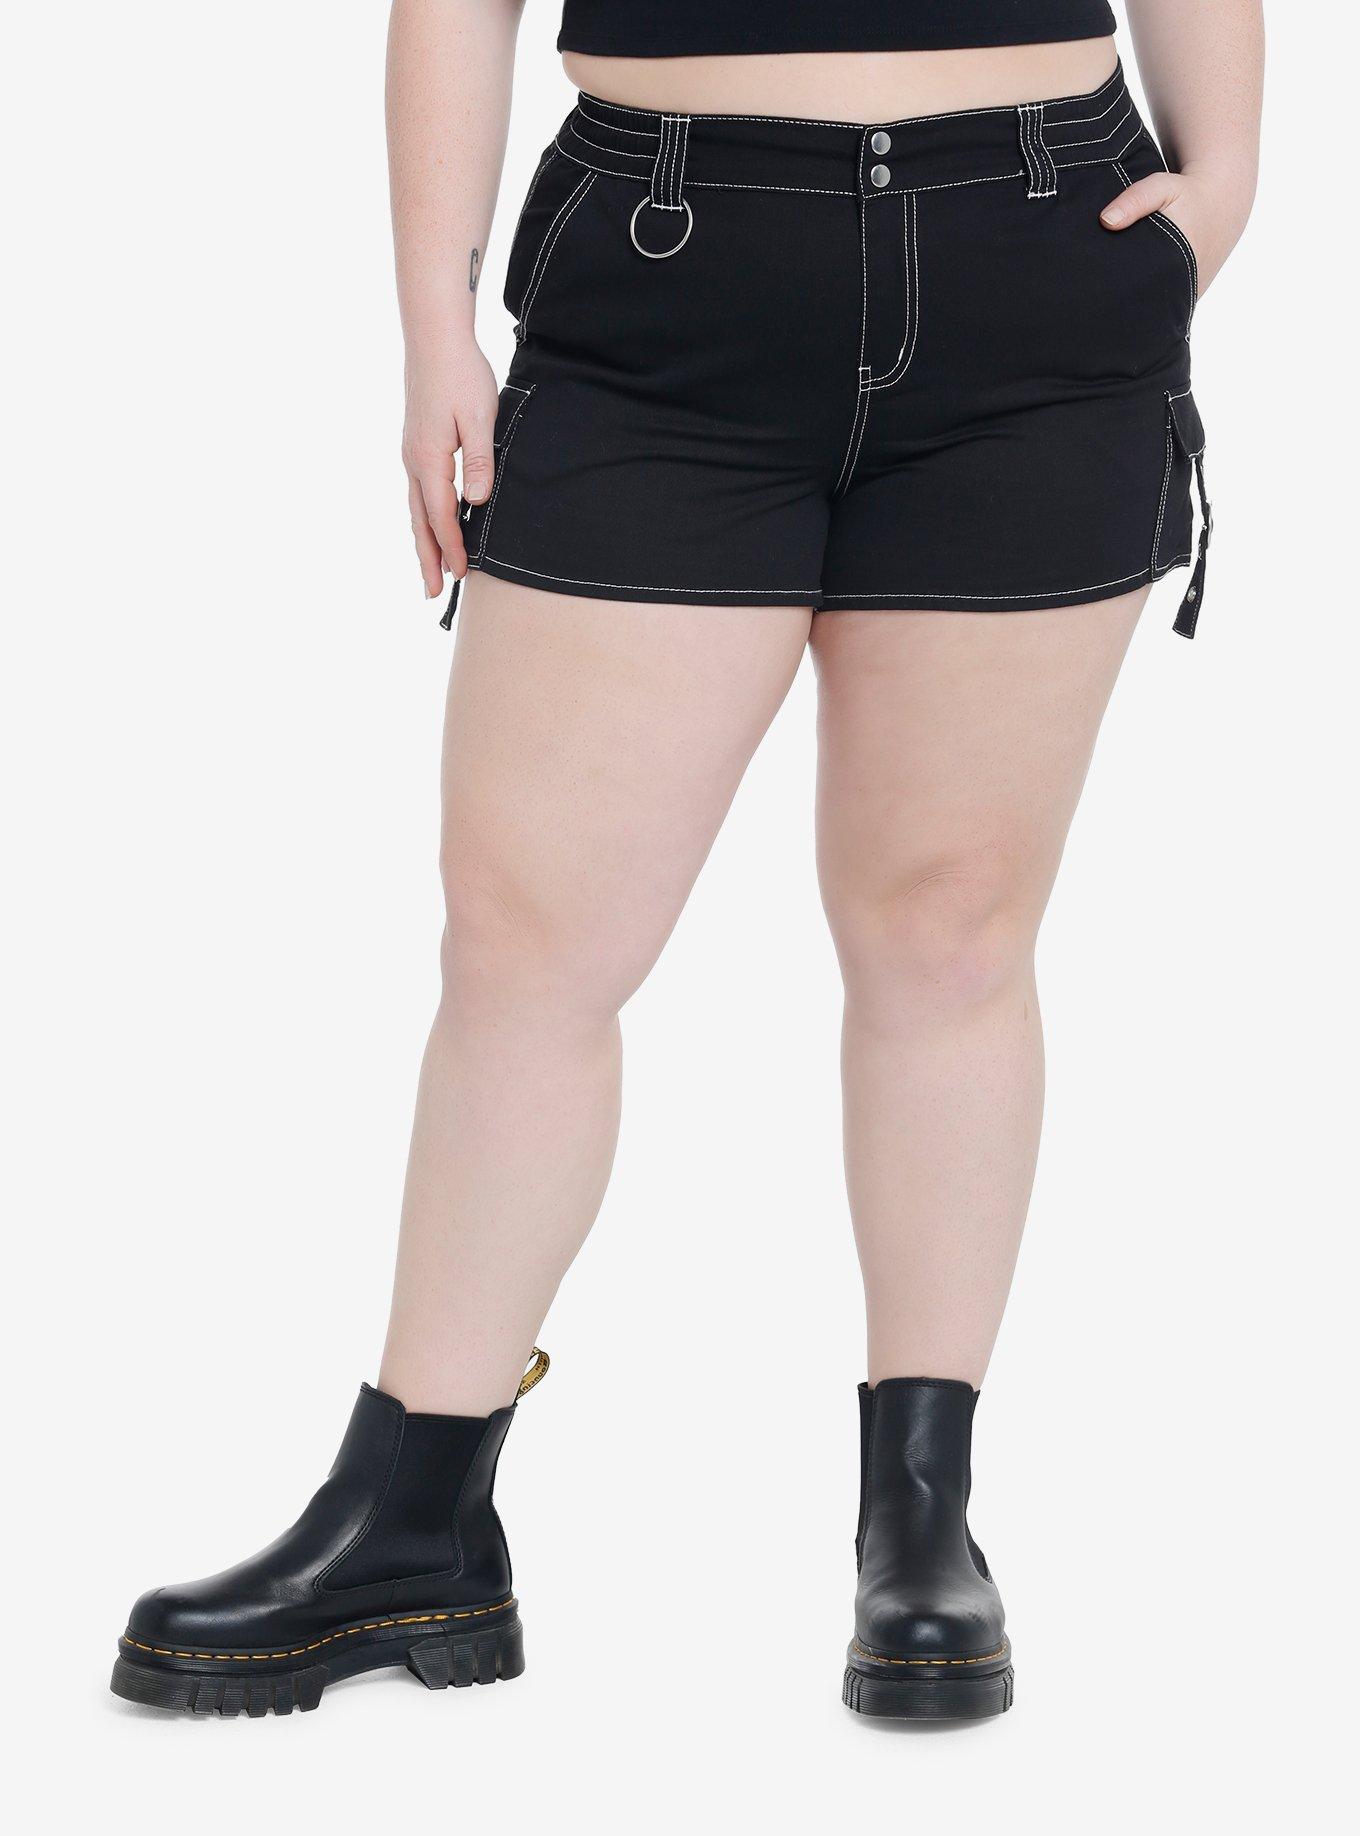 Hardware Grommet Black Cargo Shorts Plus Size, BLACK, hi-res